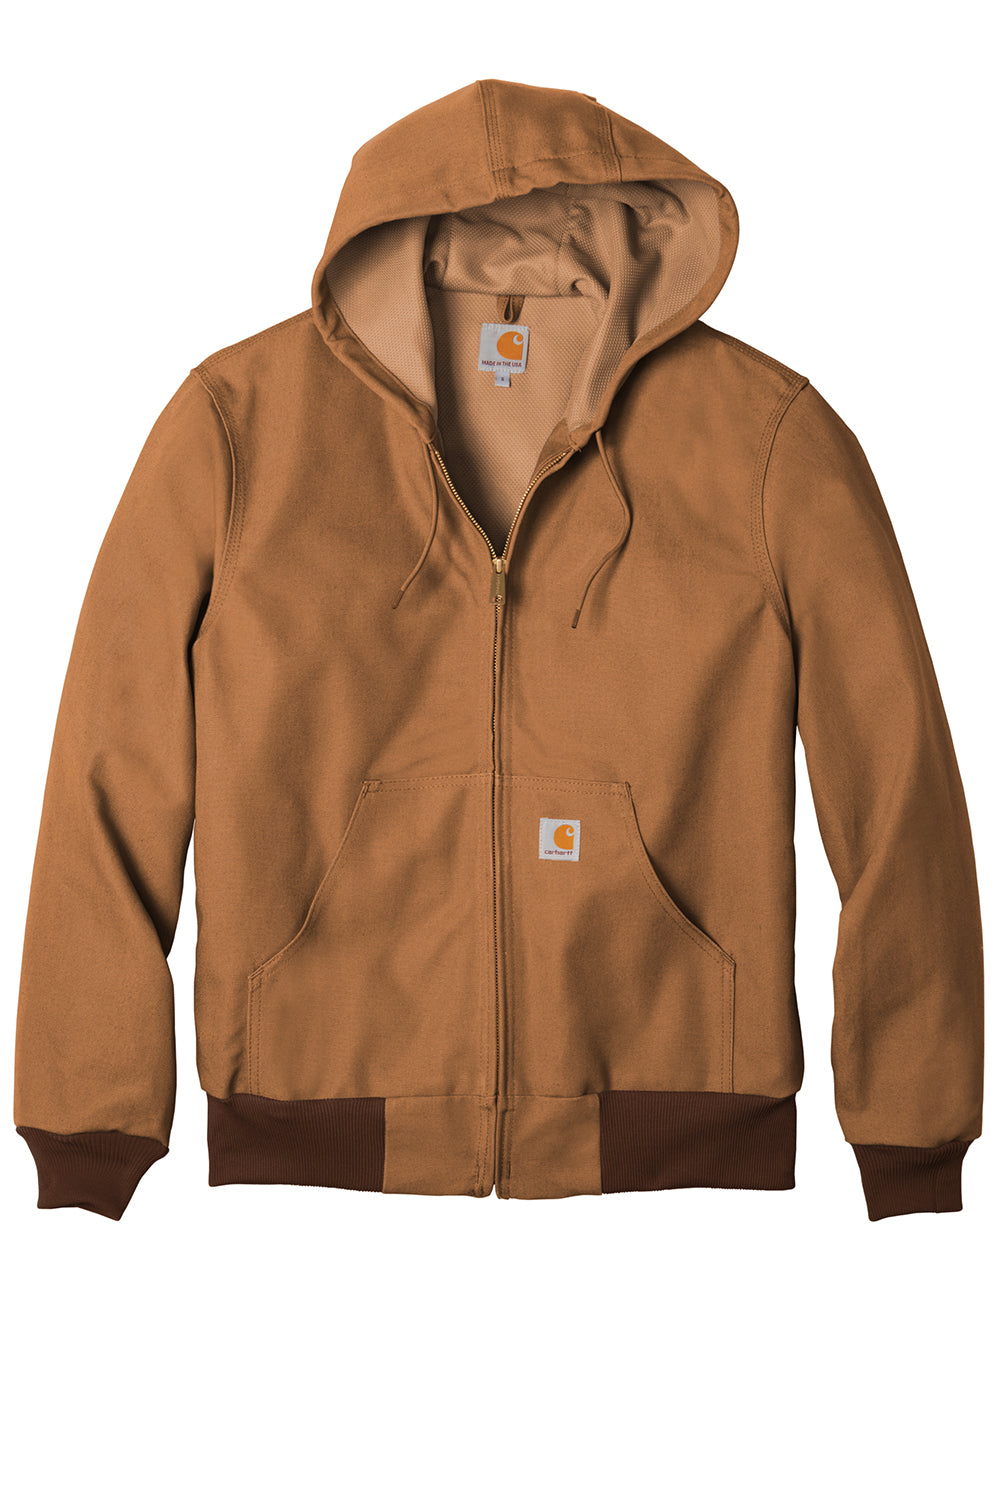 Carhartt CTJ131/CTTJ131 Mens Wind & Water Resistant Duck Cloth Full Zip Hooded Work Jacket Carhartt Brown Flat Front